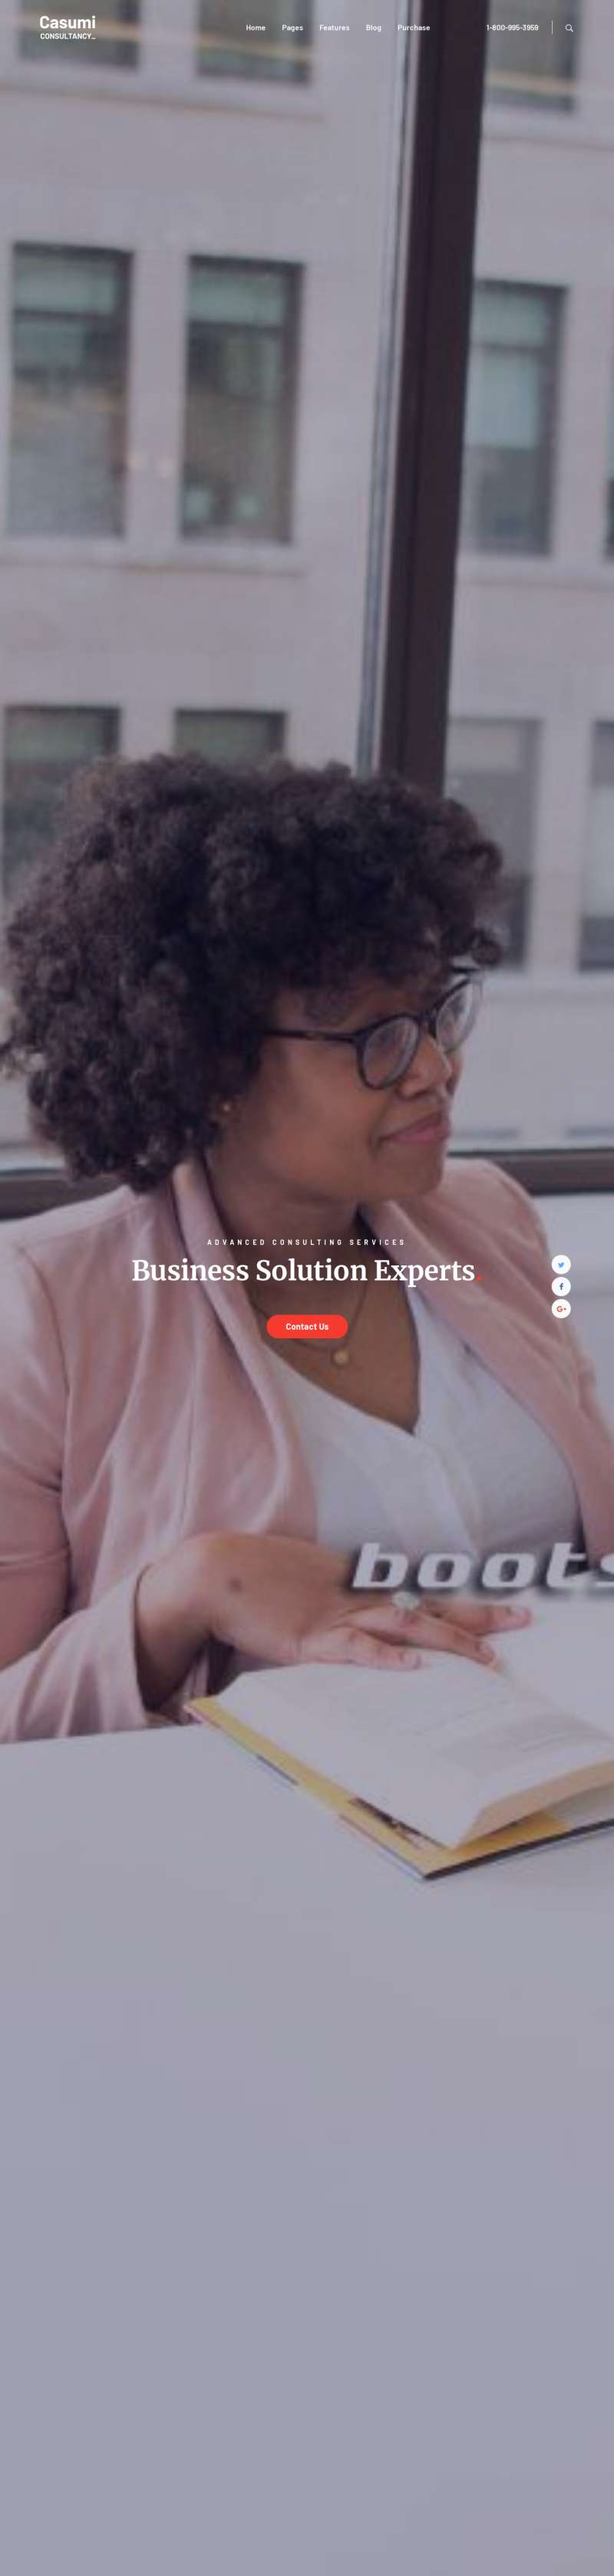 Bootstrap商业投资公司网站模板